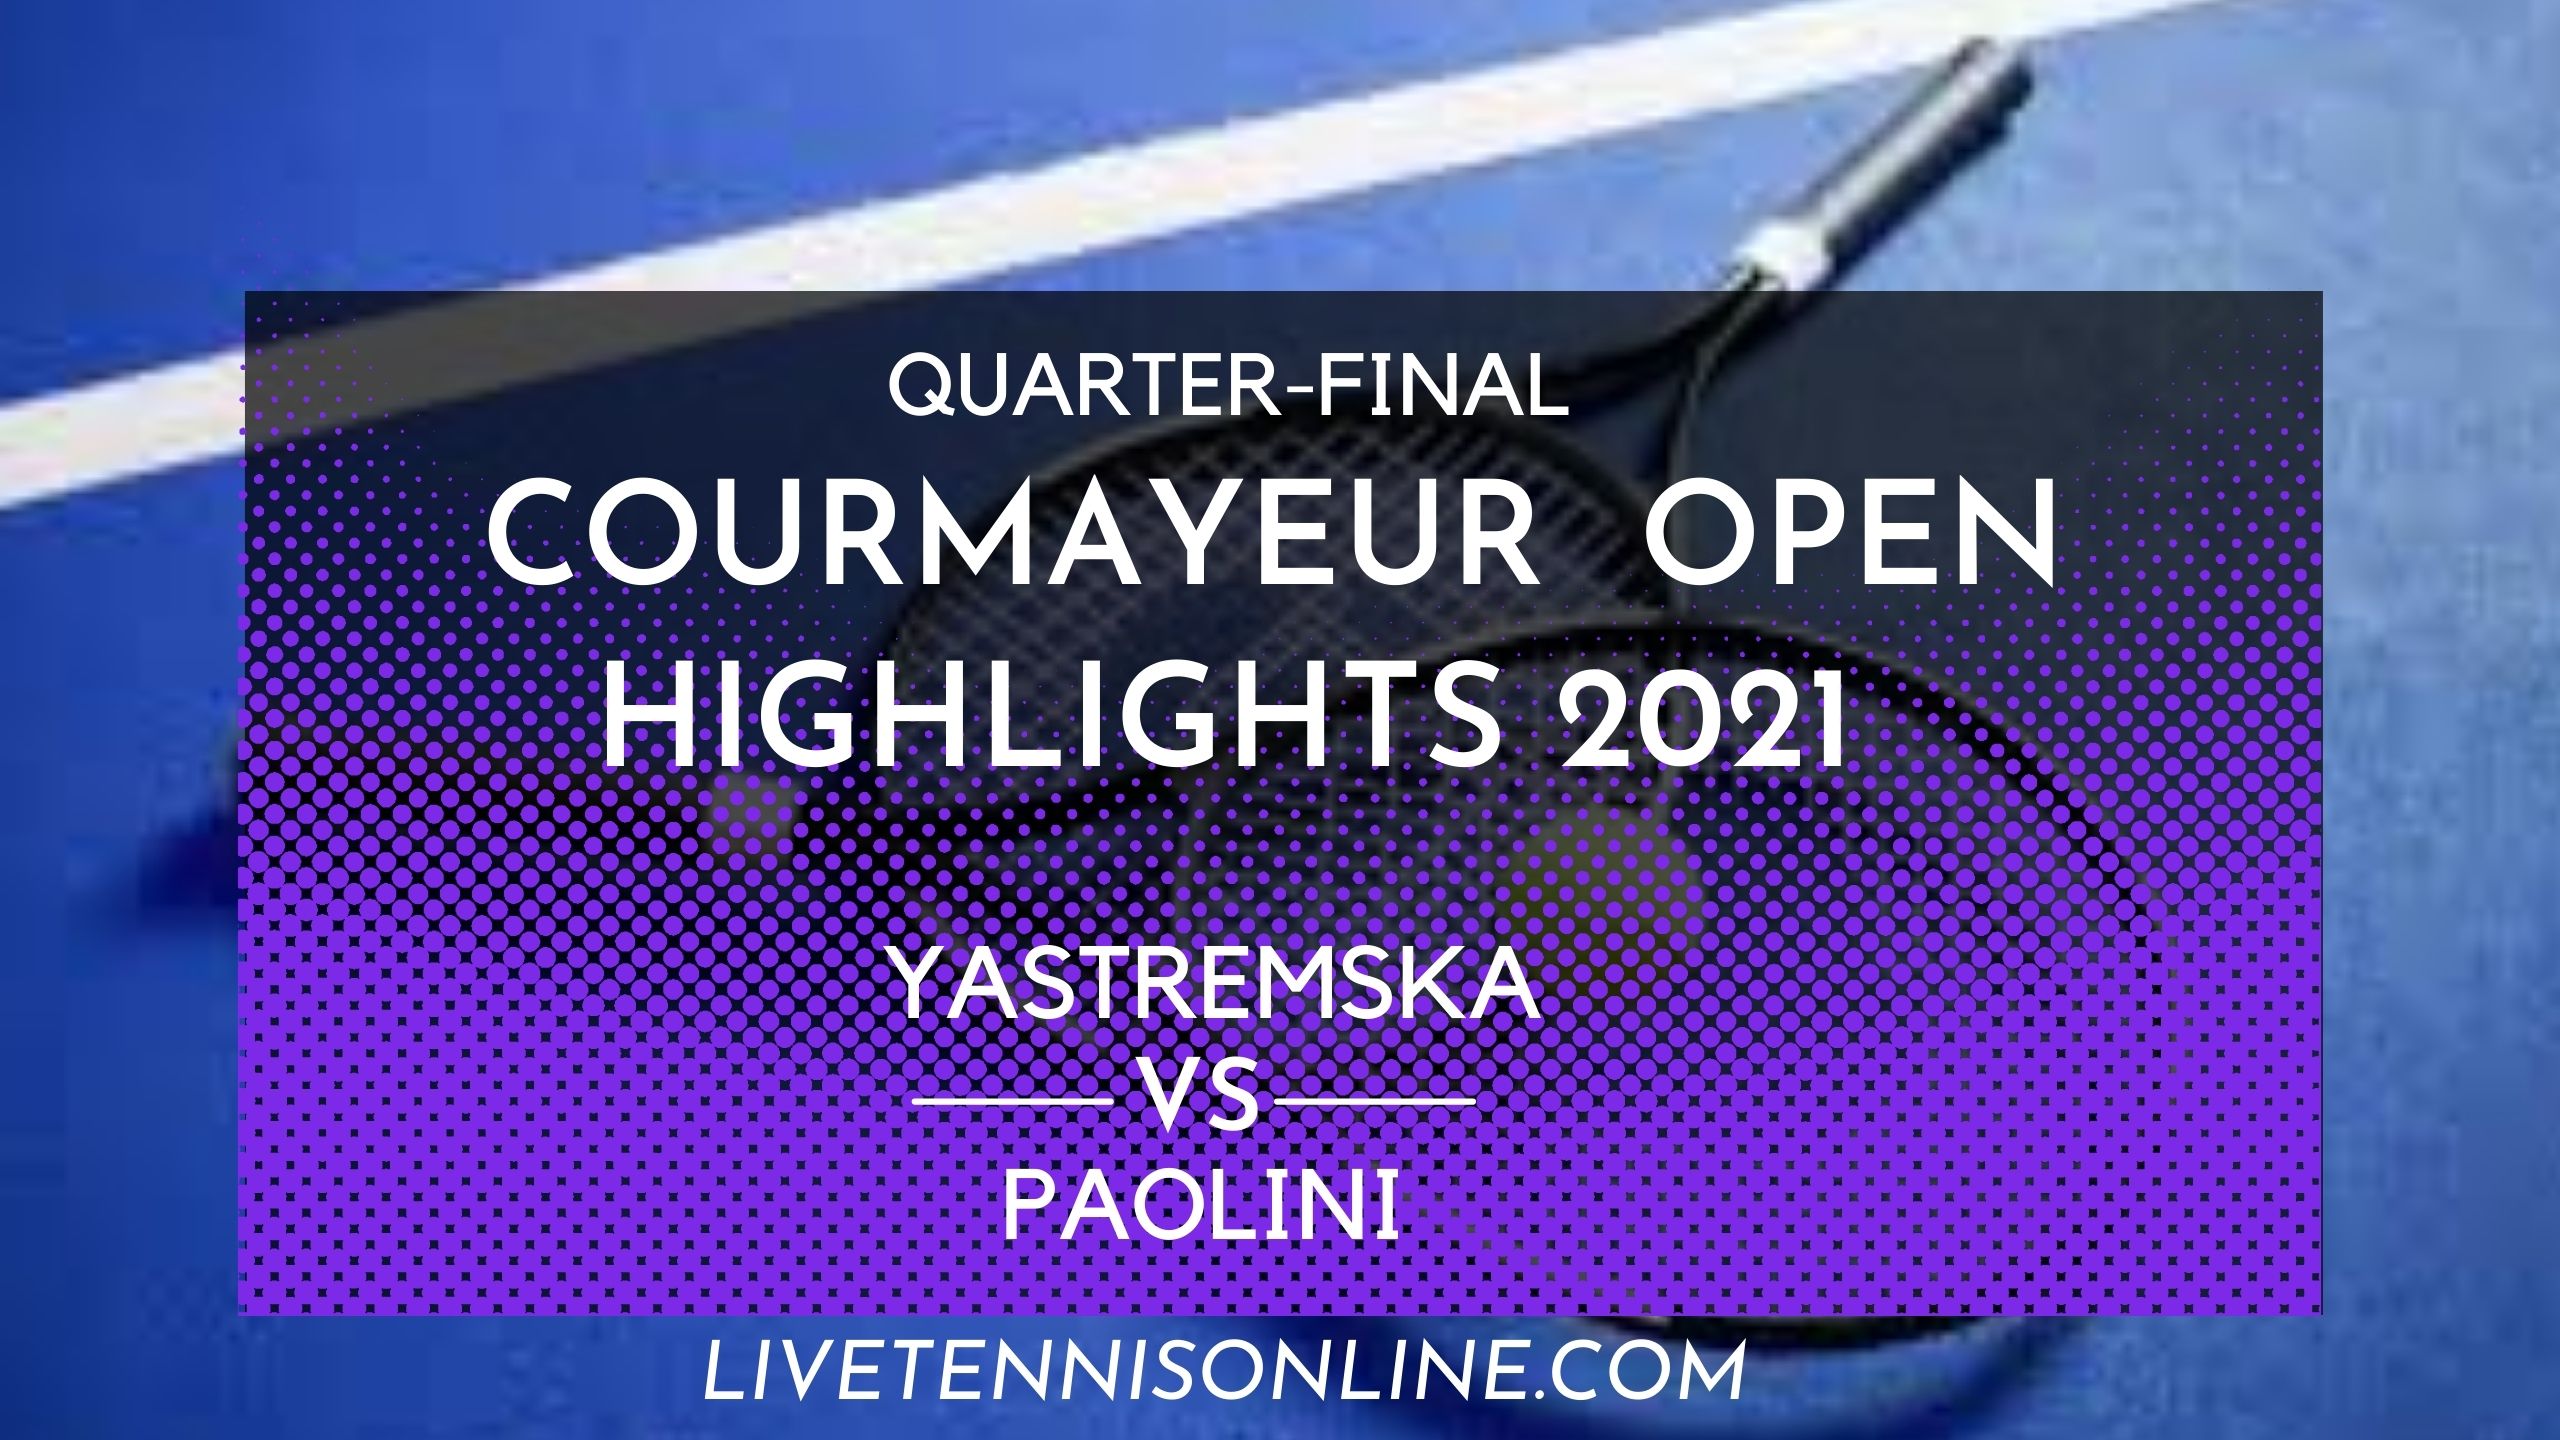 Yastremska Vs Paolini QF Highlights 2021 Courmayeur Open